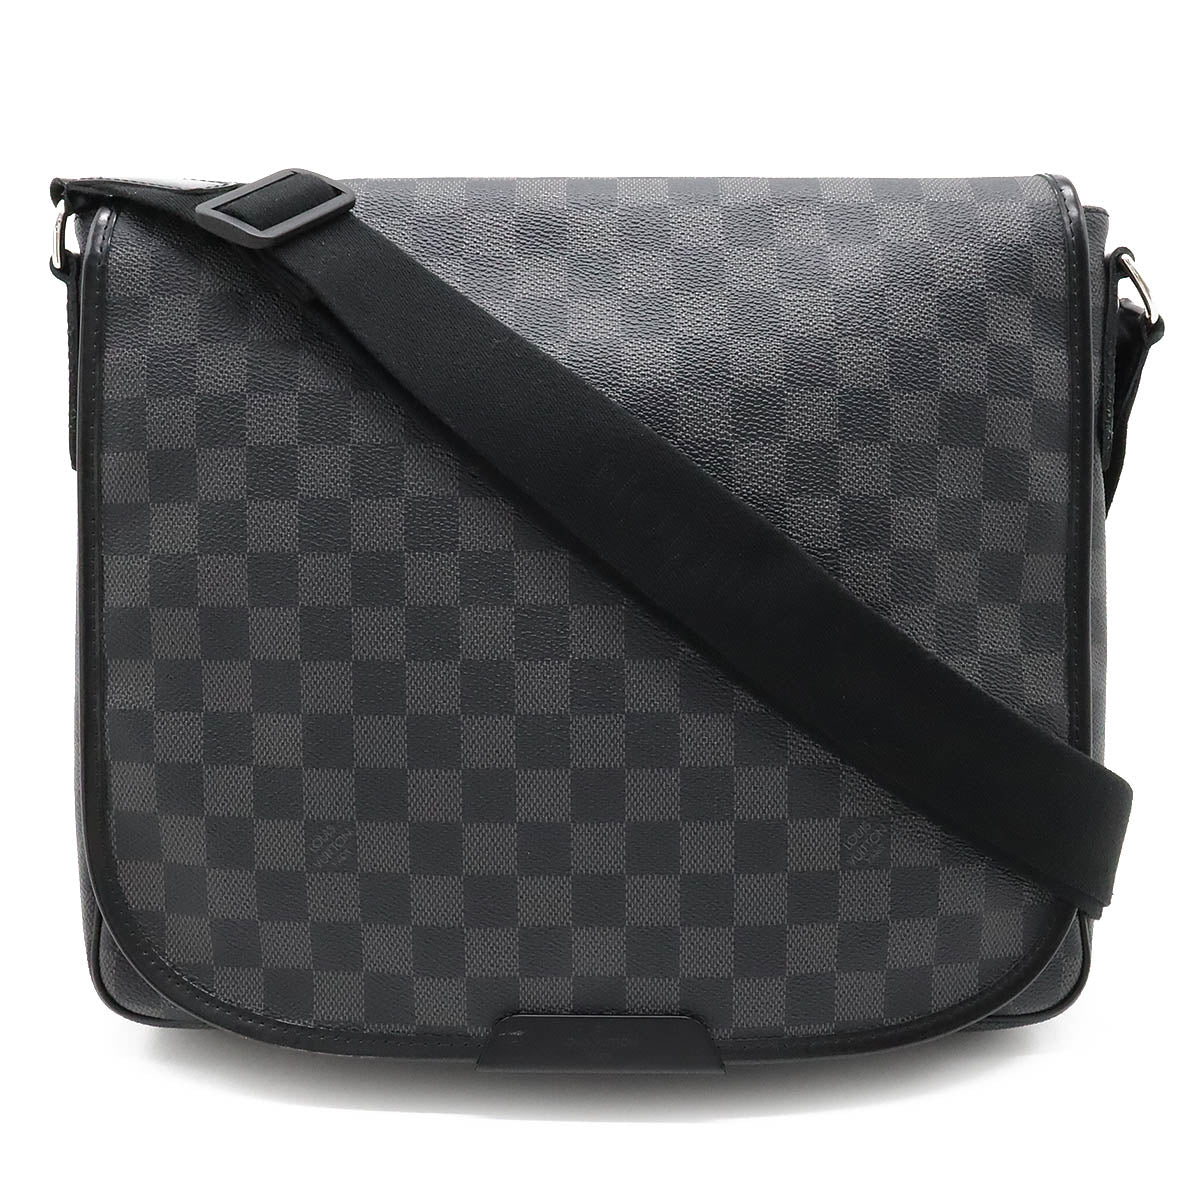 Daniel mm satchel leather satchel Louis Vuitton Grey in Leather